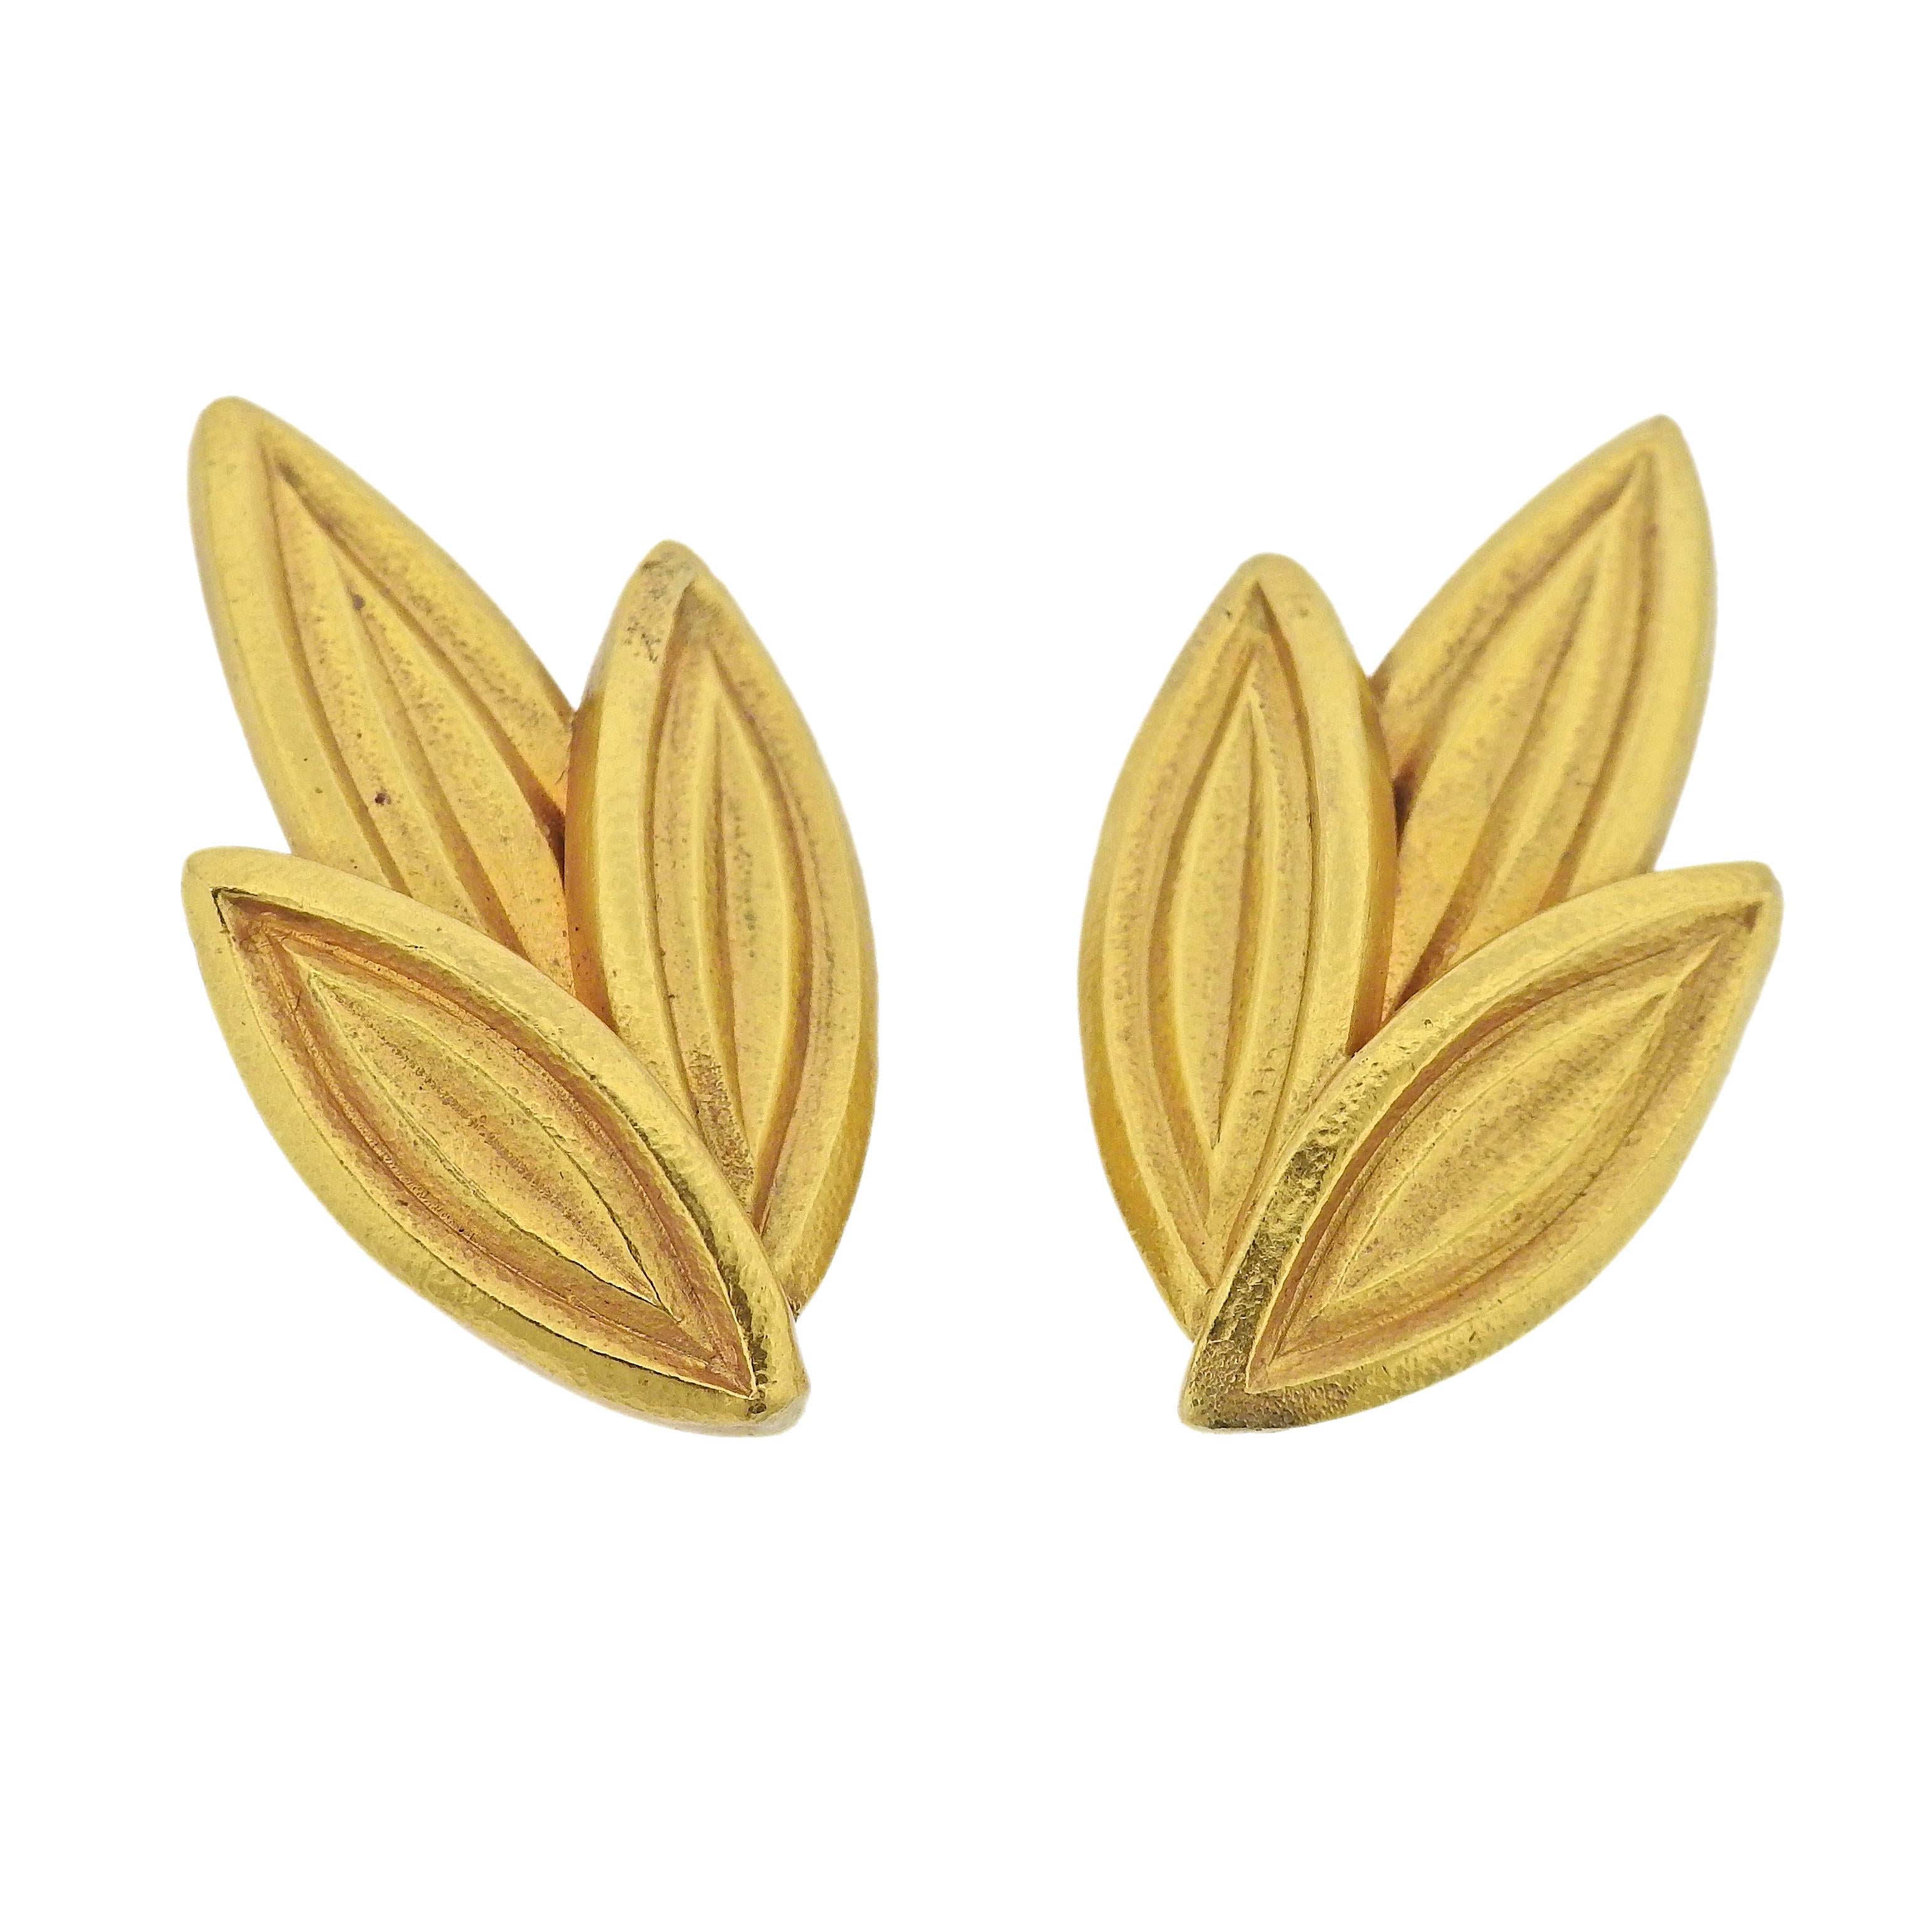 Pair of 18k yellow gold leaf motif earrings, by Greek designer Ilias Lalaounis. Earrings are 1.75